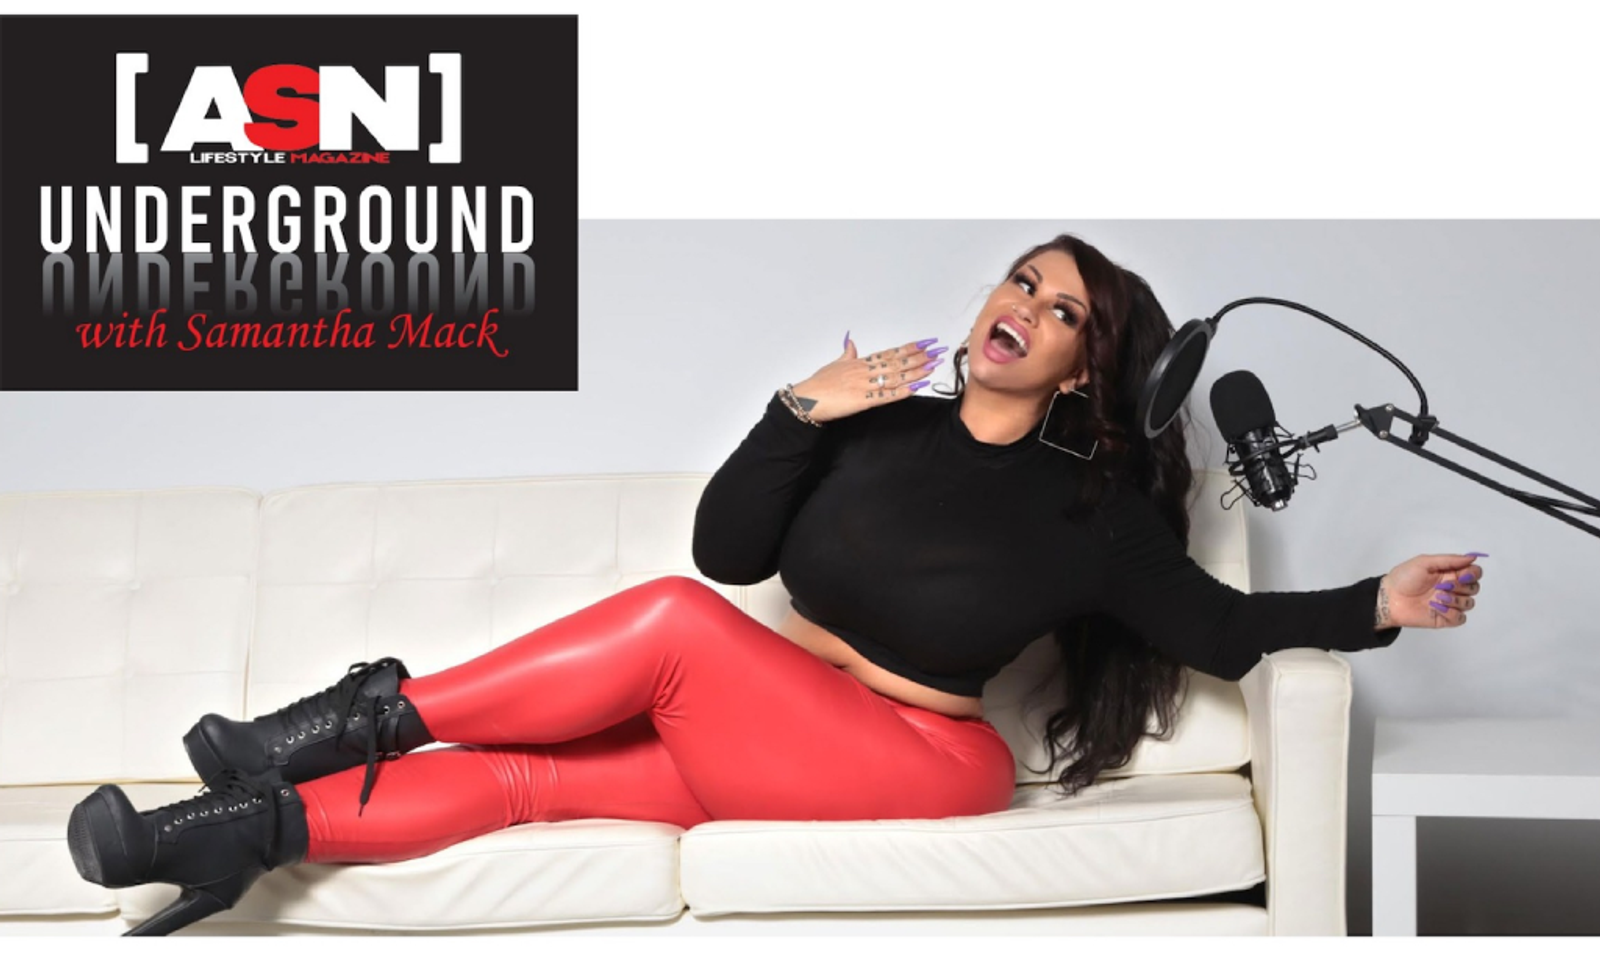 ASN Lifestyle Magazine Set to Launch New Show With Samantha Mack | AVN